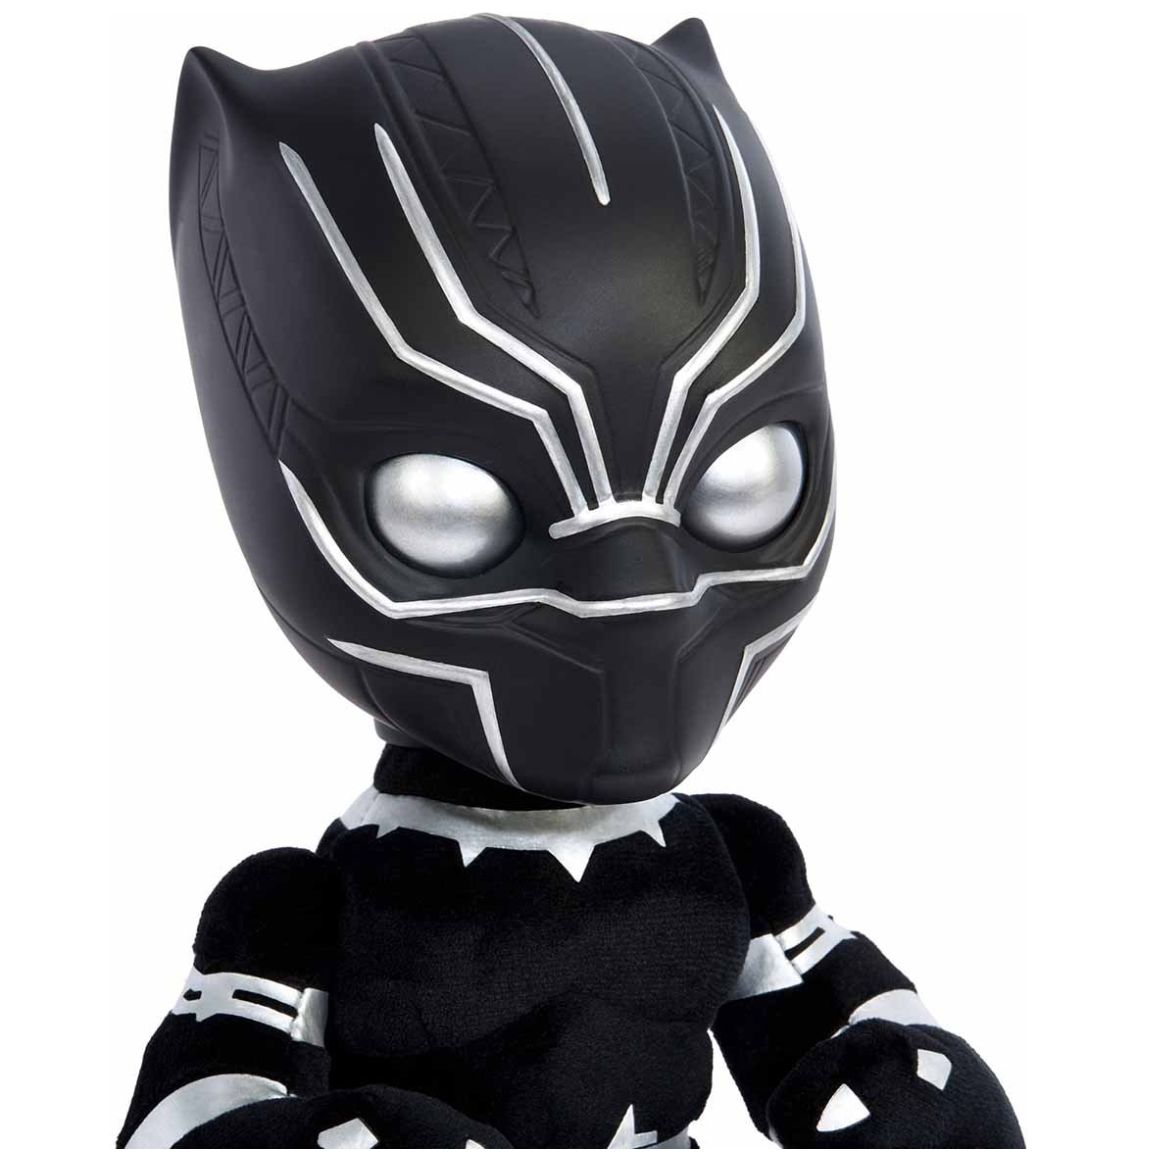 Peluche Black Panther con Sonidos Marvel